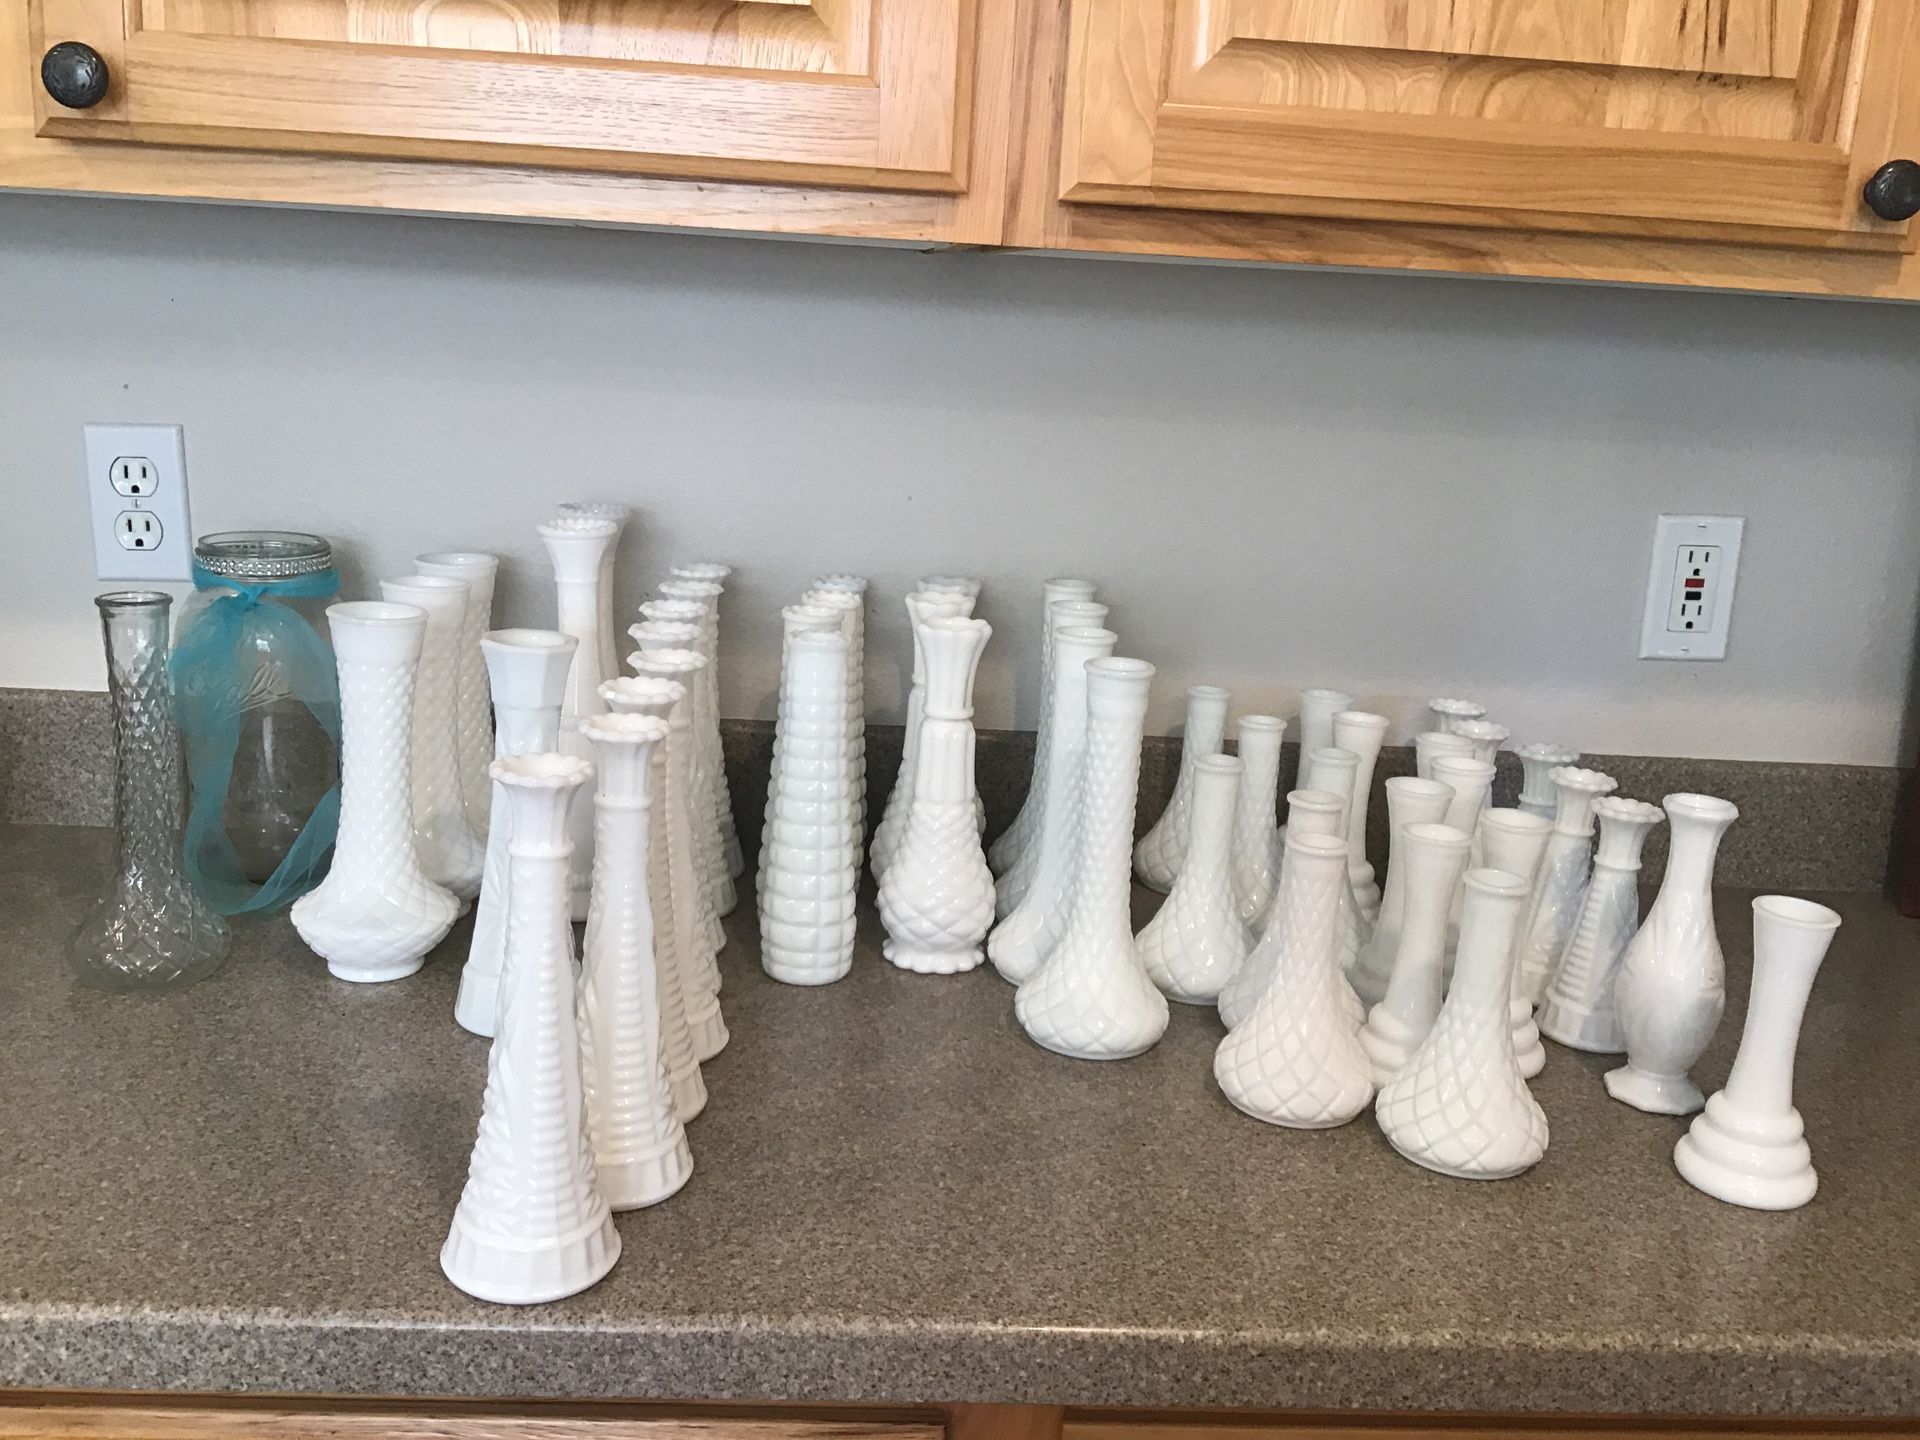 Lot of 48 vases, 46 white vintage bud vase vases candle holder holders, 2 clear, for party or wedding decoration